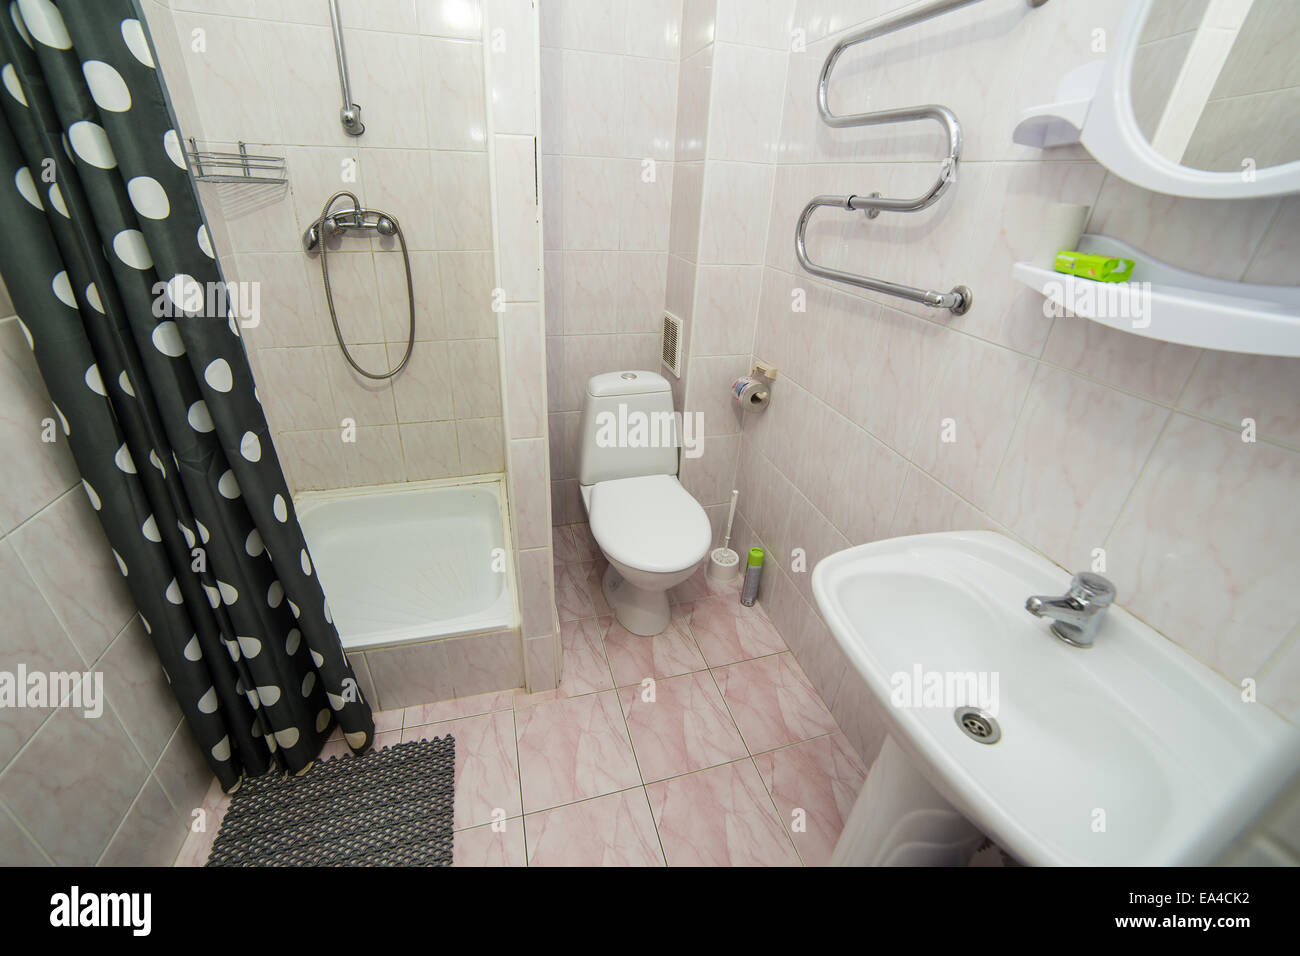 Bathroom, WC, toilet, lavatory room interior design Stock Photo